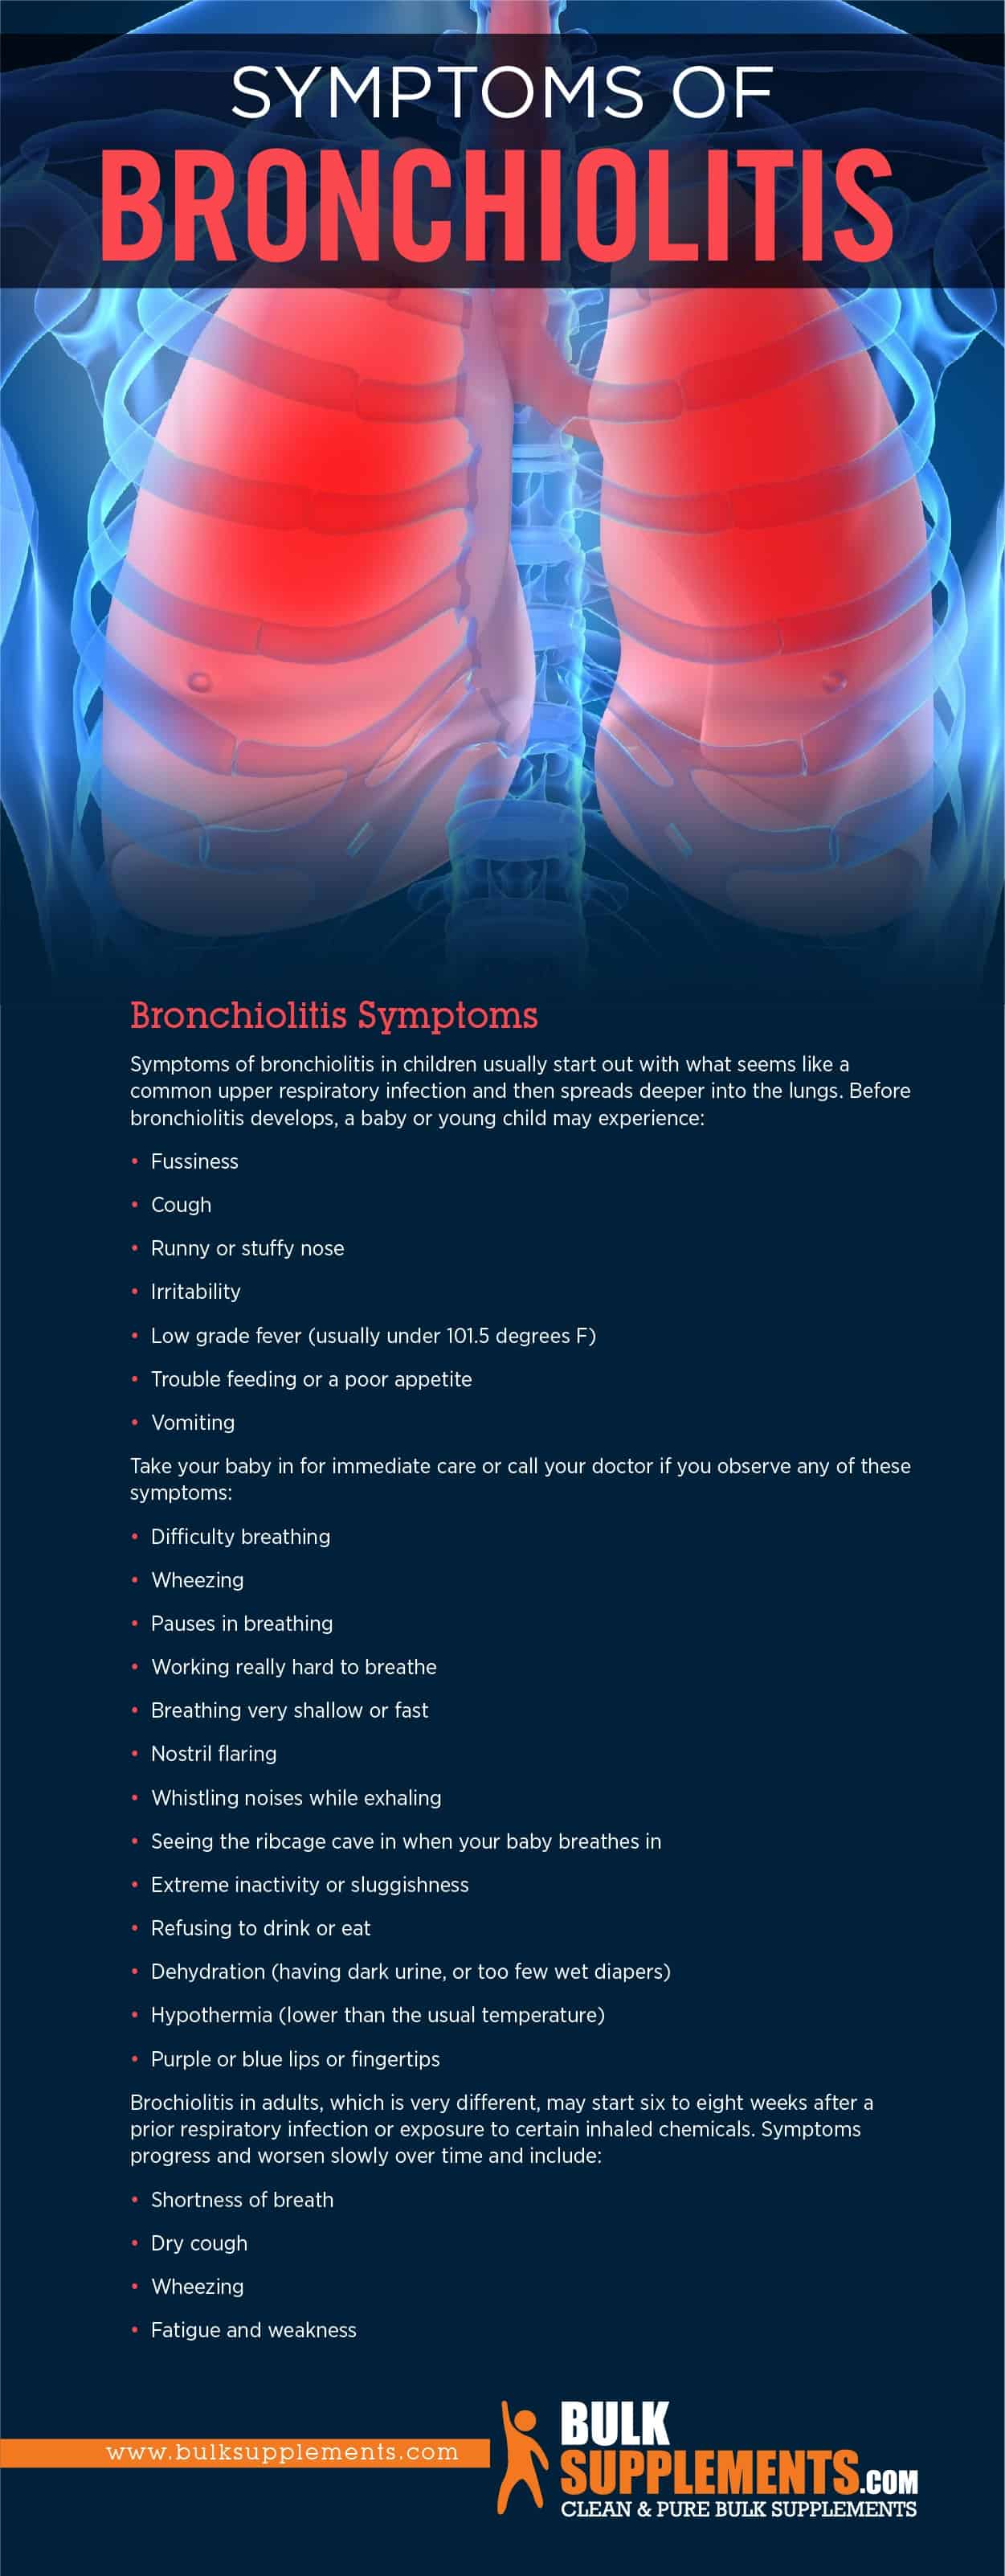 Symptoms of Brochiolitis